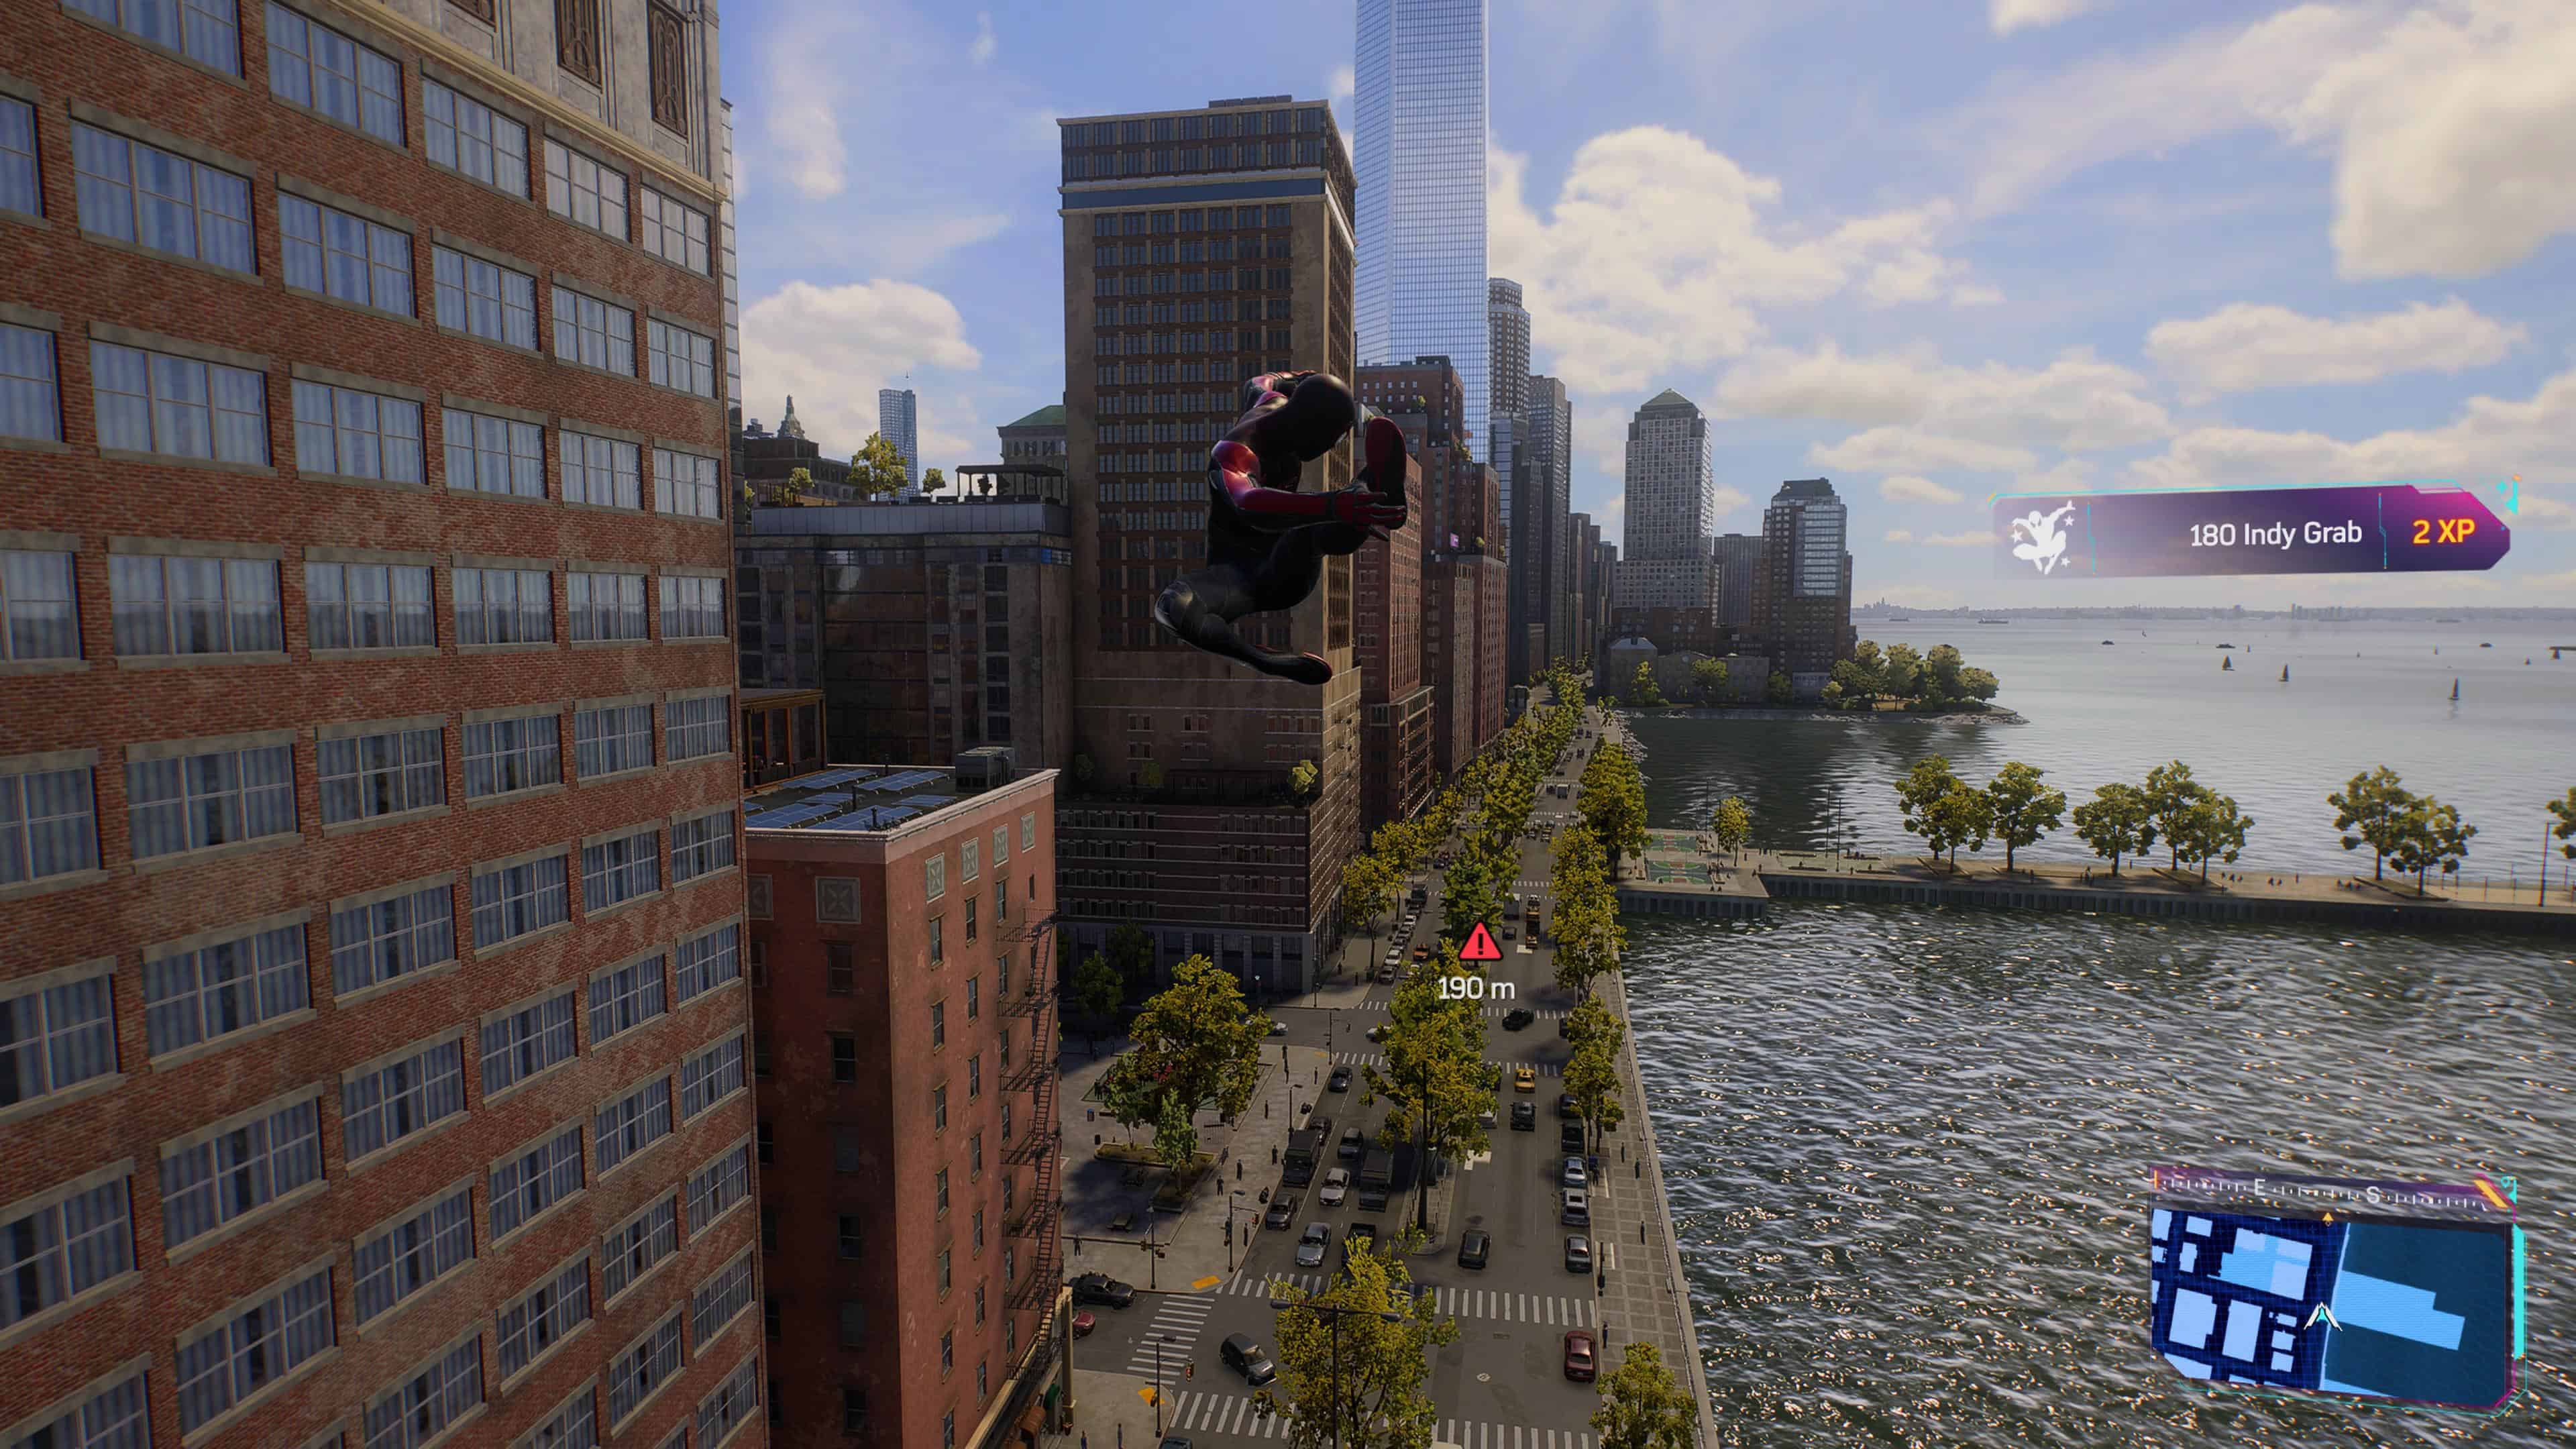 Spider-Man 2: Miles effortlessly flying over a city, showcasing some impressive tricks.